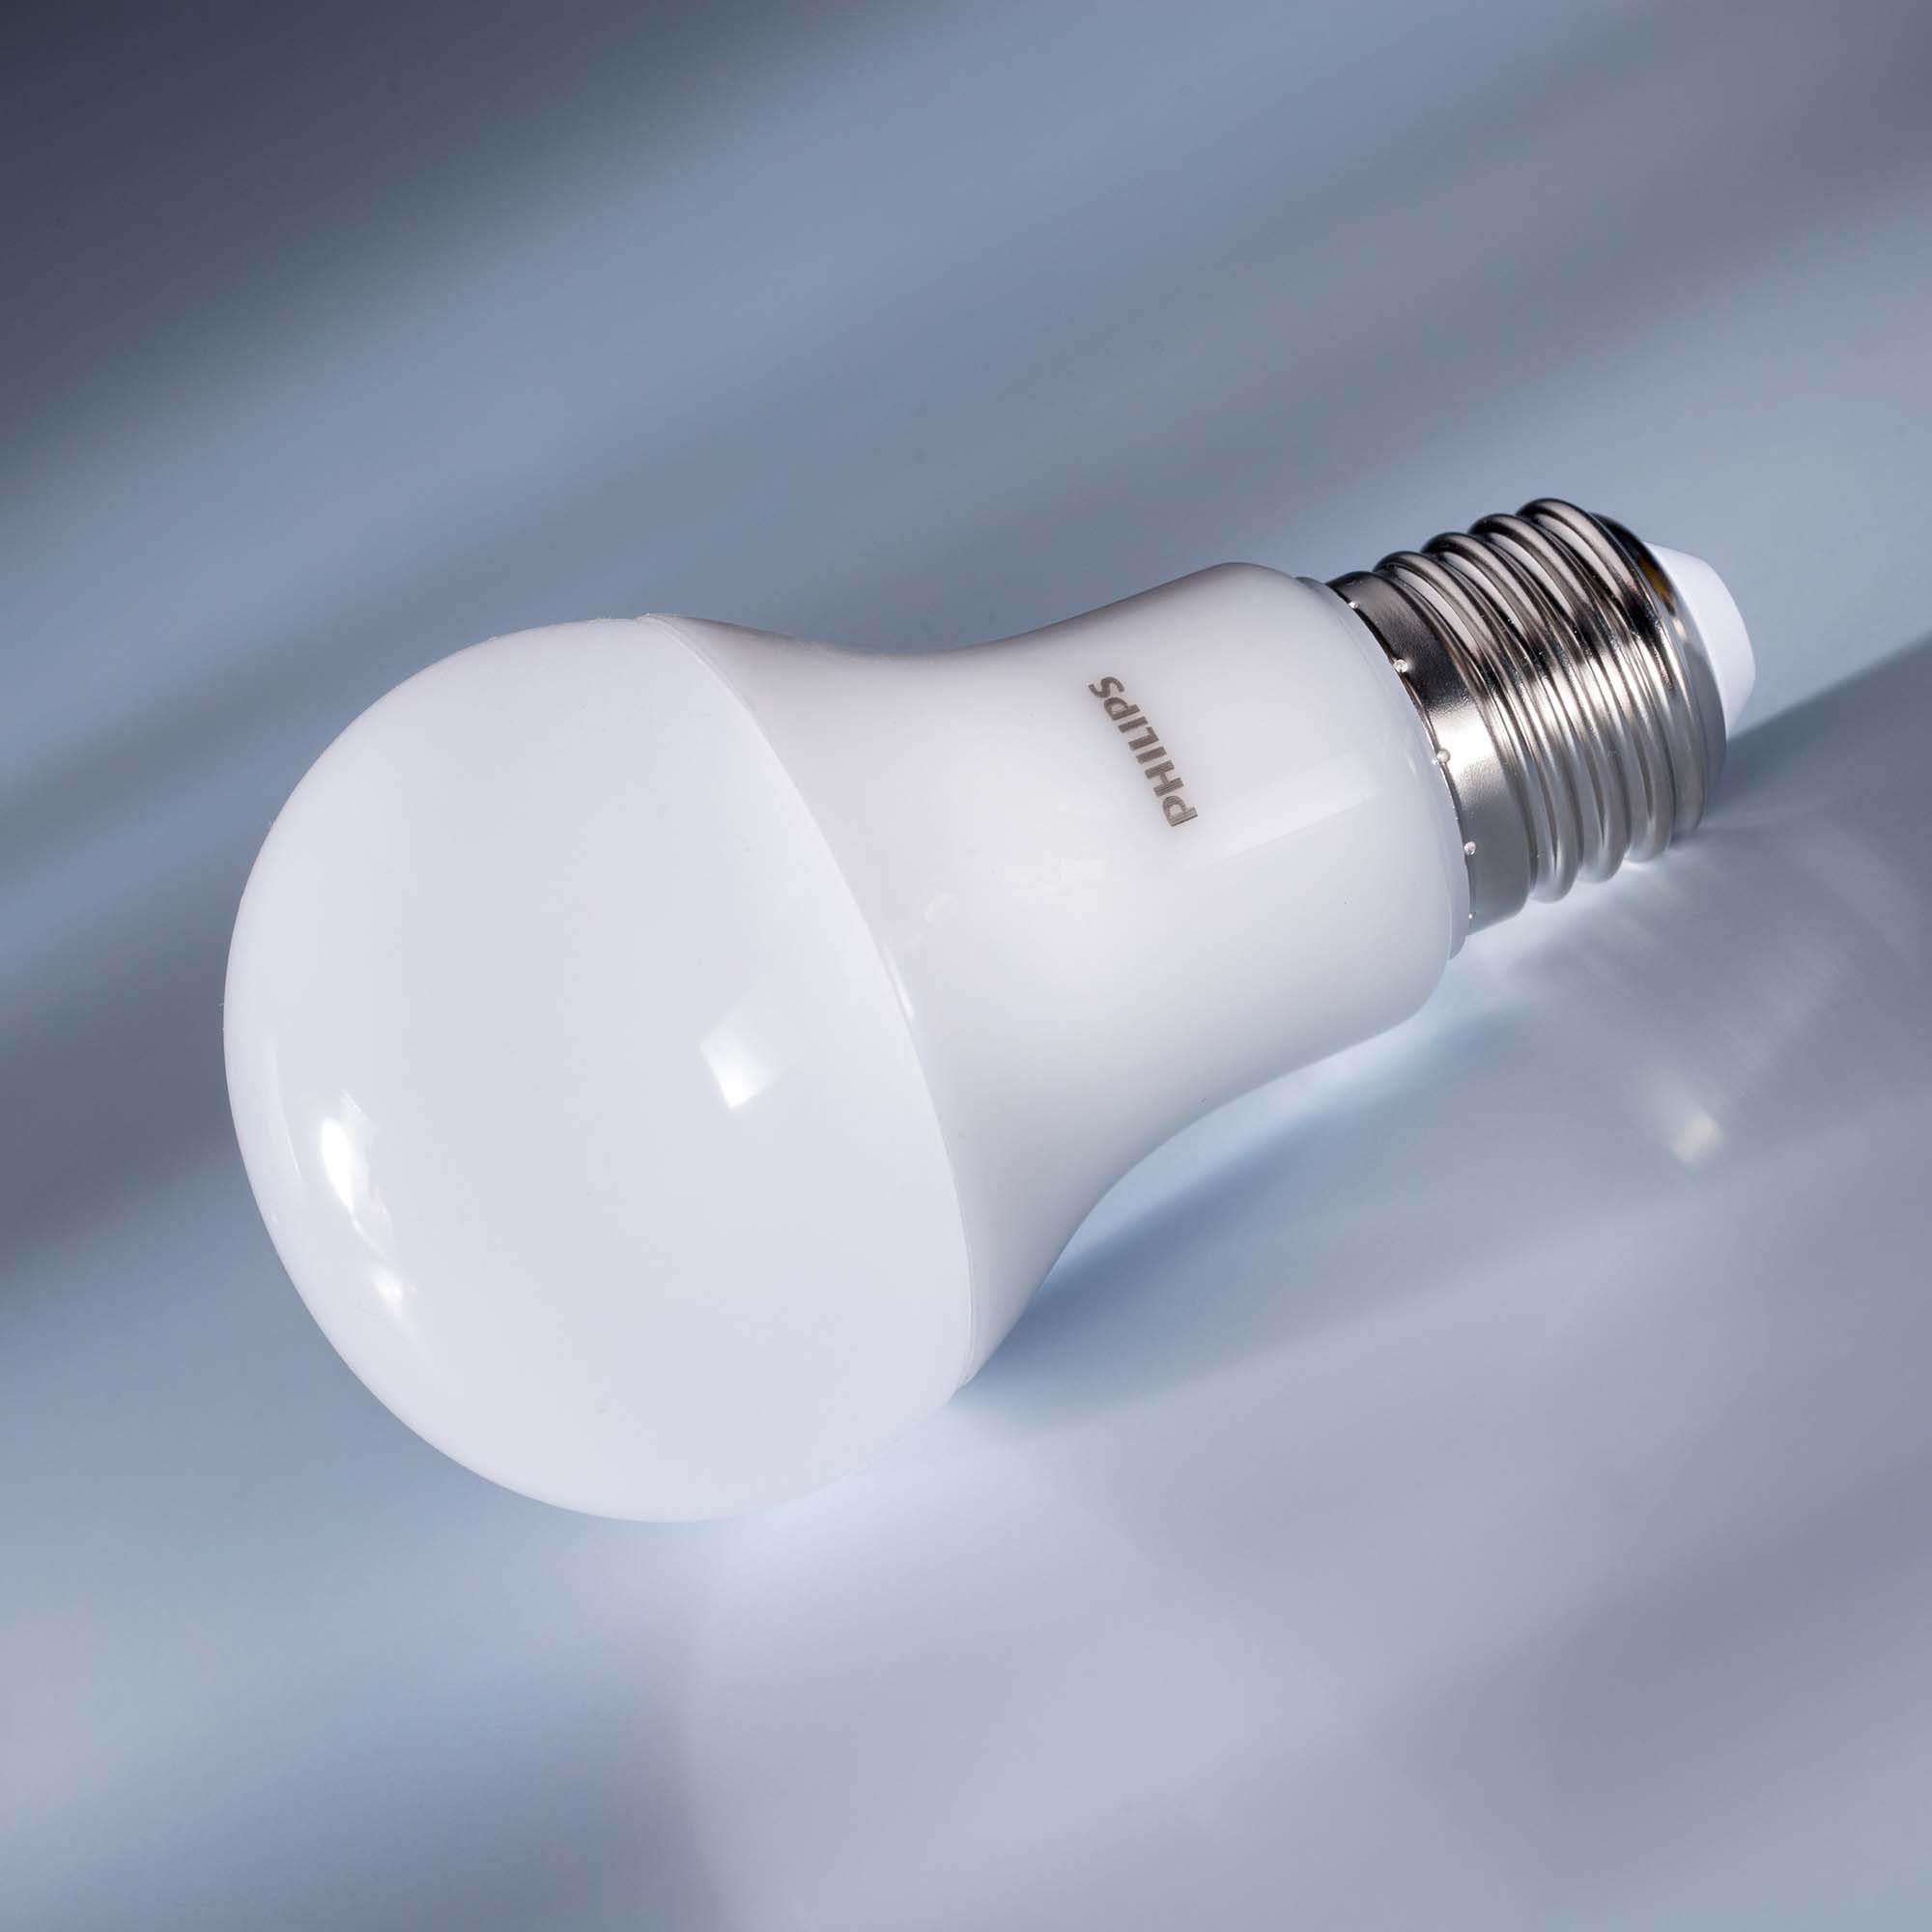 LED Bulb Philips CorePro LEDbulb 13-100W A60 E27 827 FR 2700K 1521lm